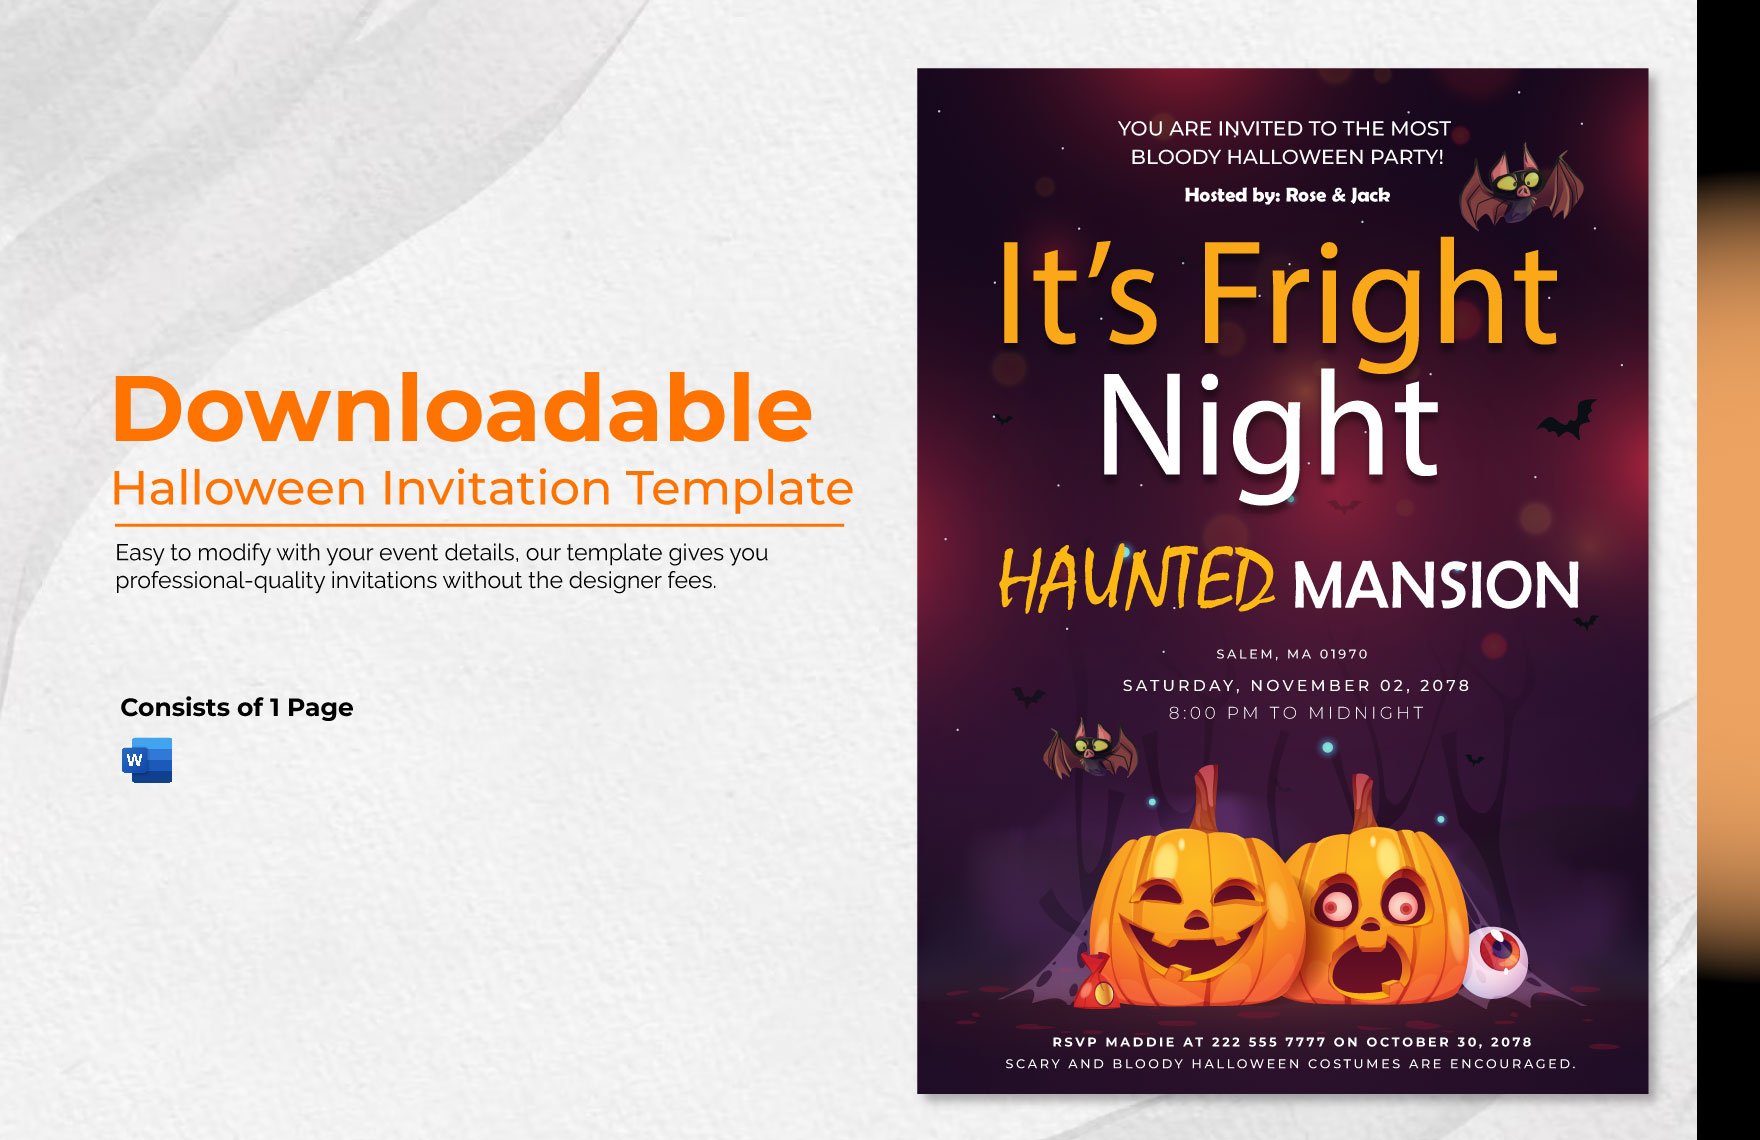 Free Downloadable Halloween Invitation Template